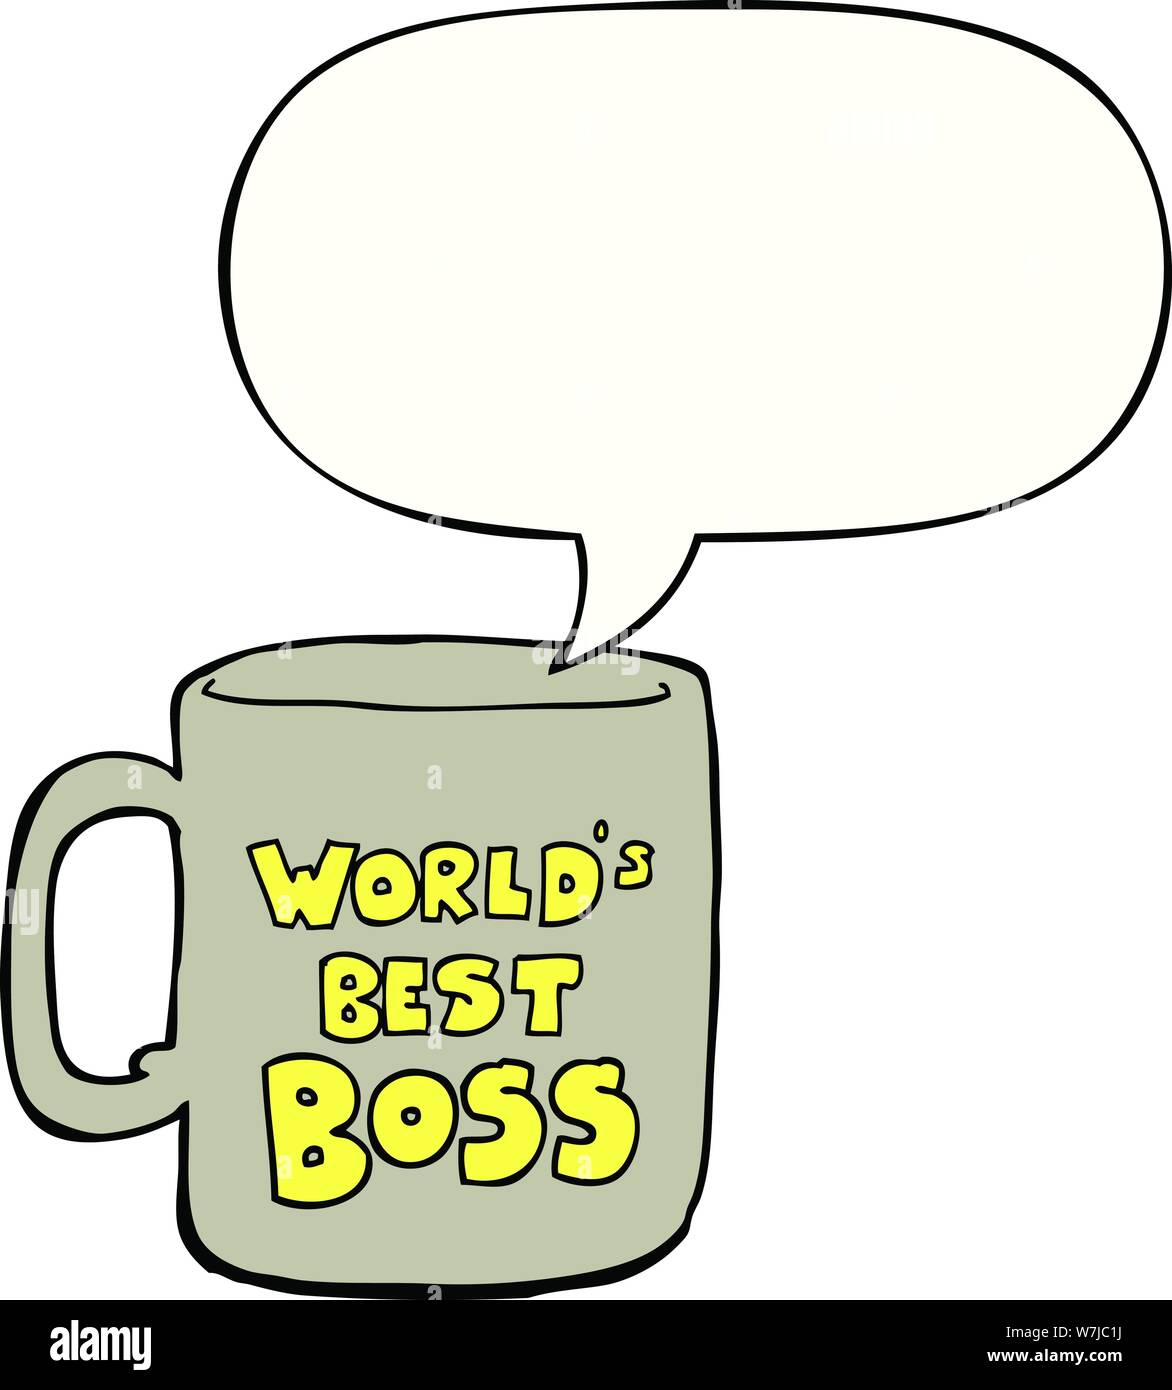 Worlds best boss mug Stock Vector Images - Alamy